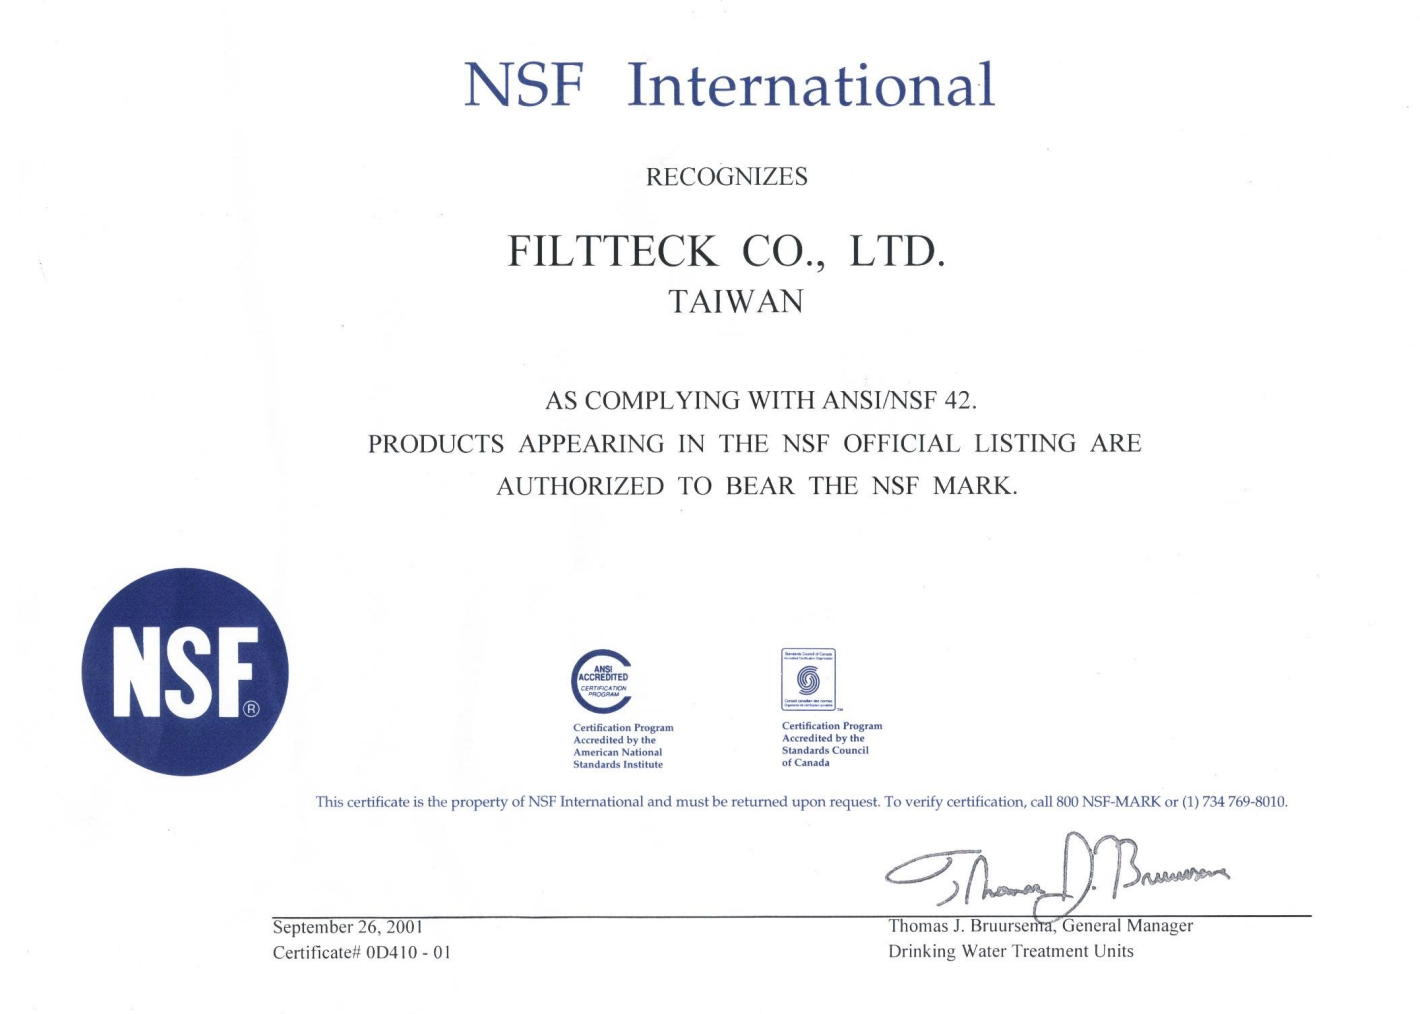 NSF @ Filtteck Co., Ltd.